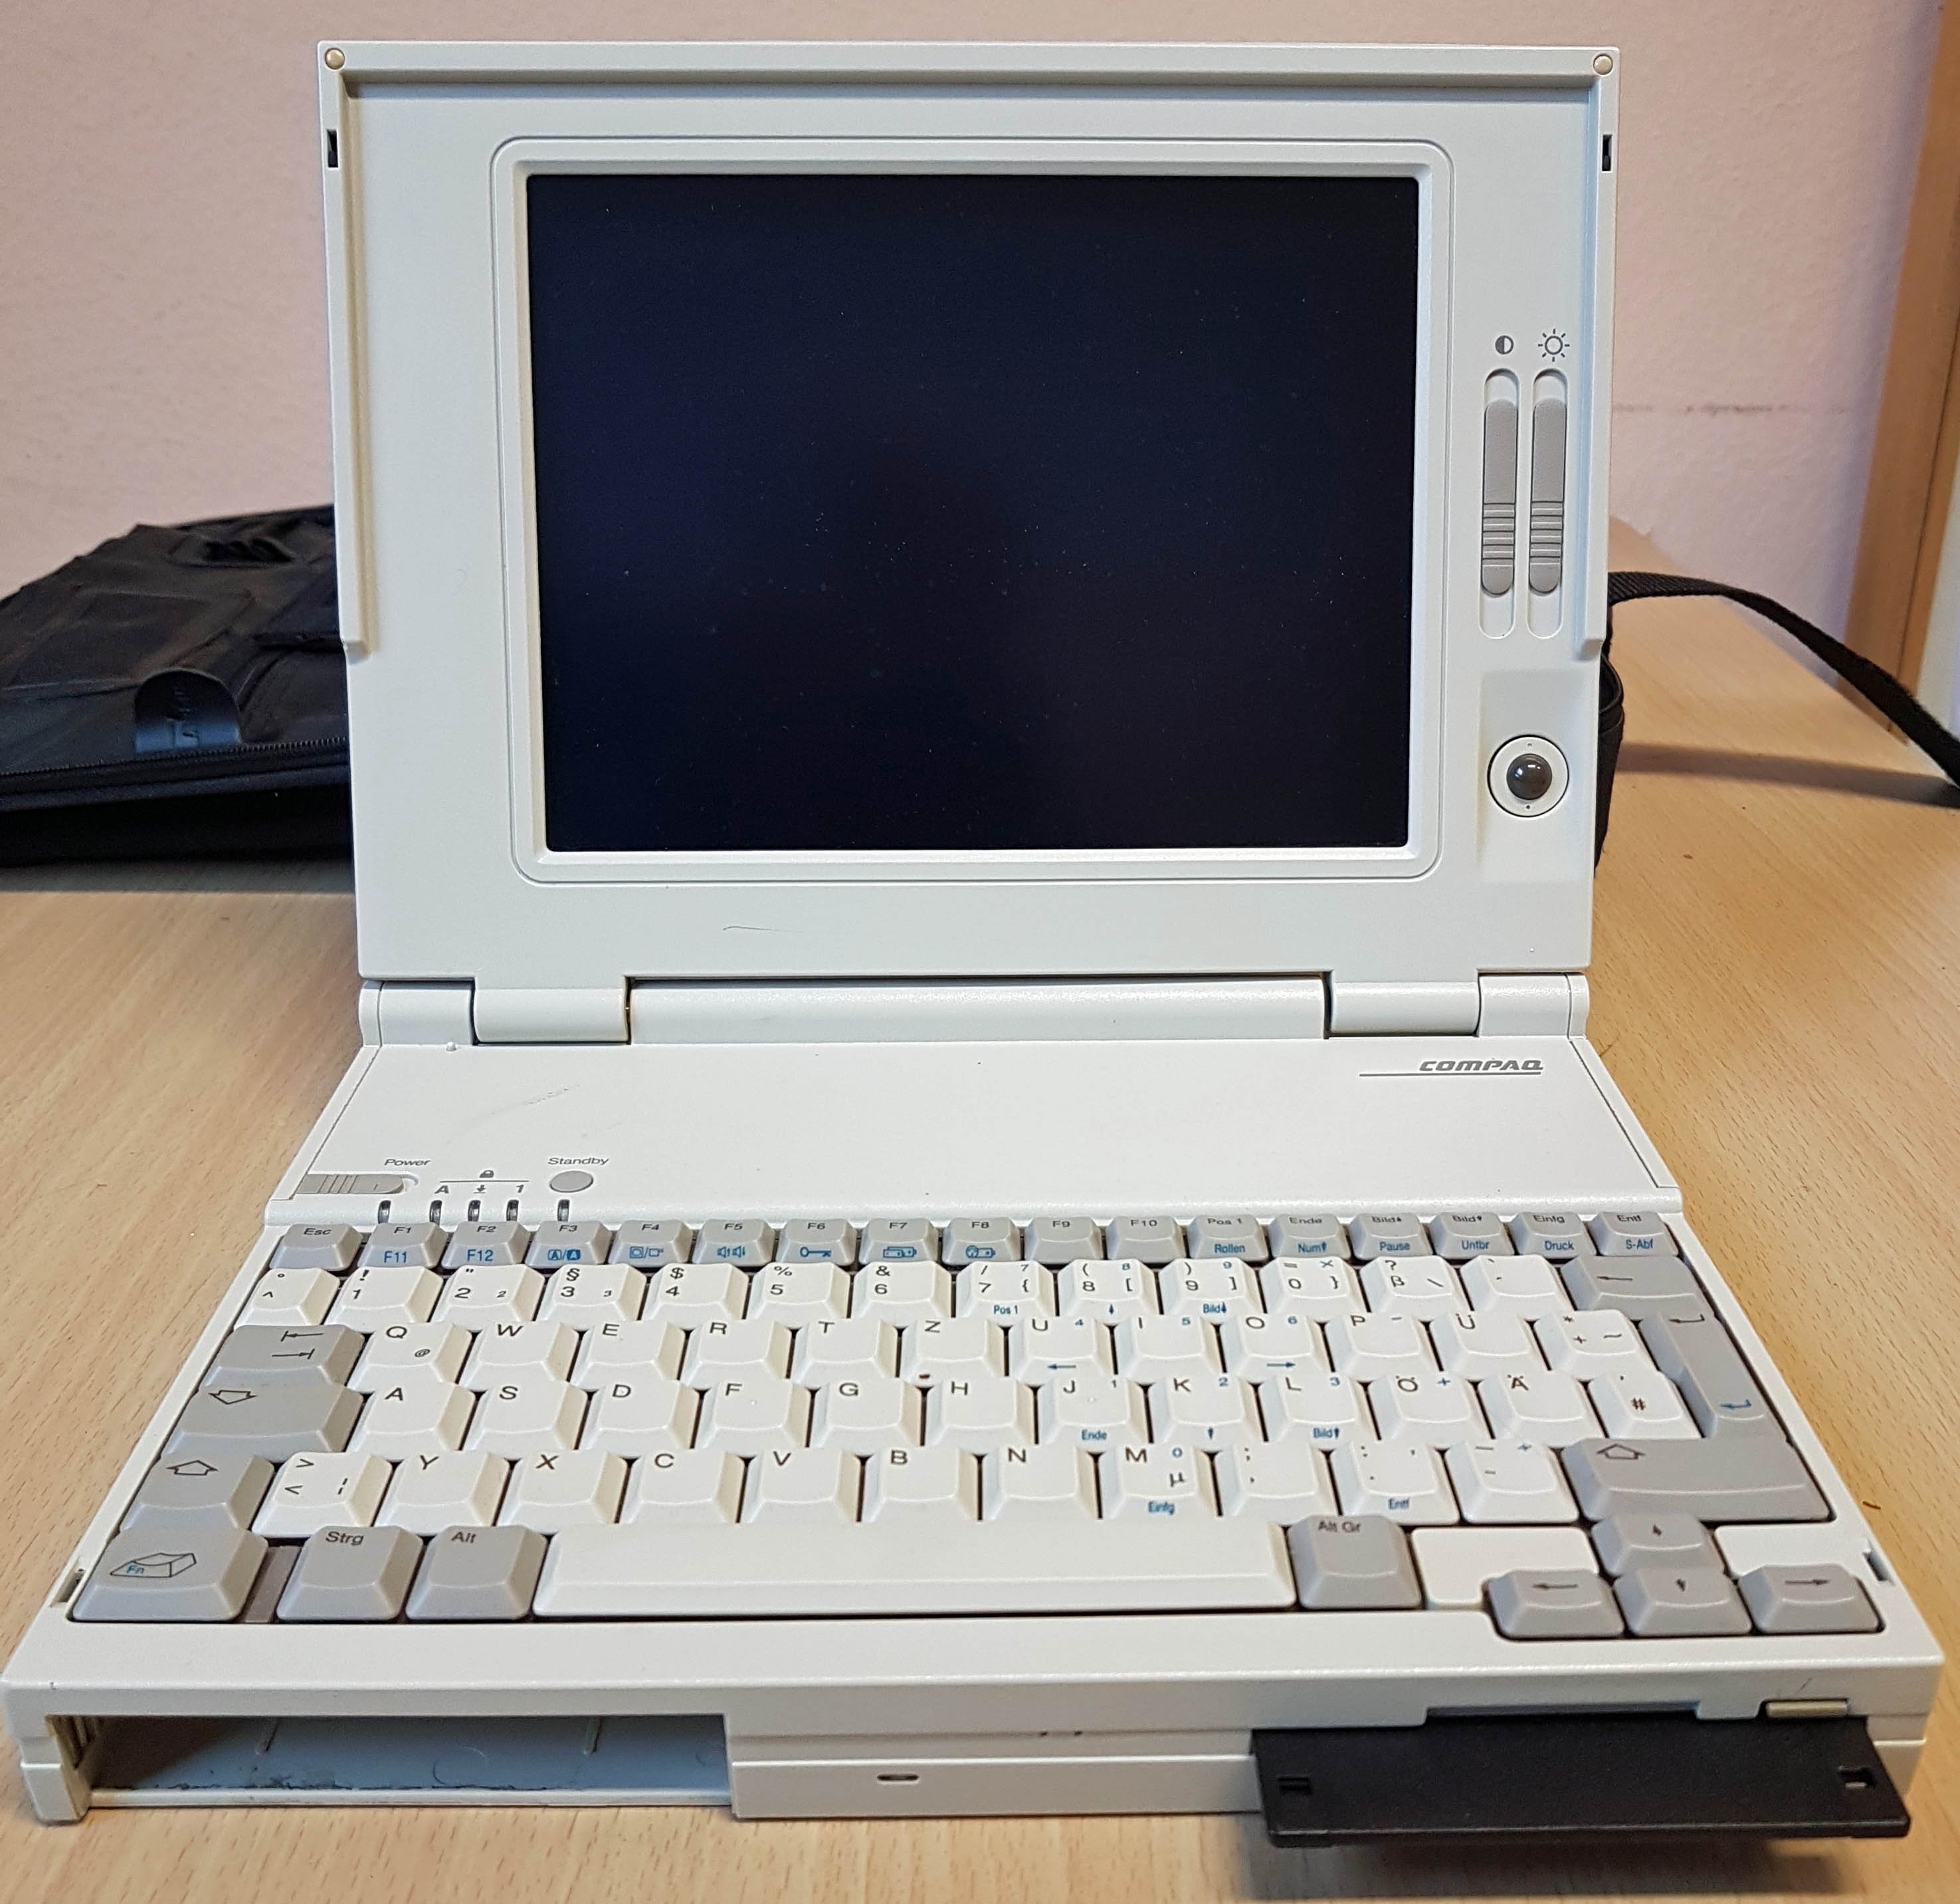 PC Computer	Compaq LTE Lite 4/25 (museum comp:ex CC BY-NC-SA)